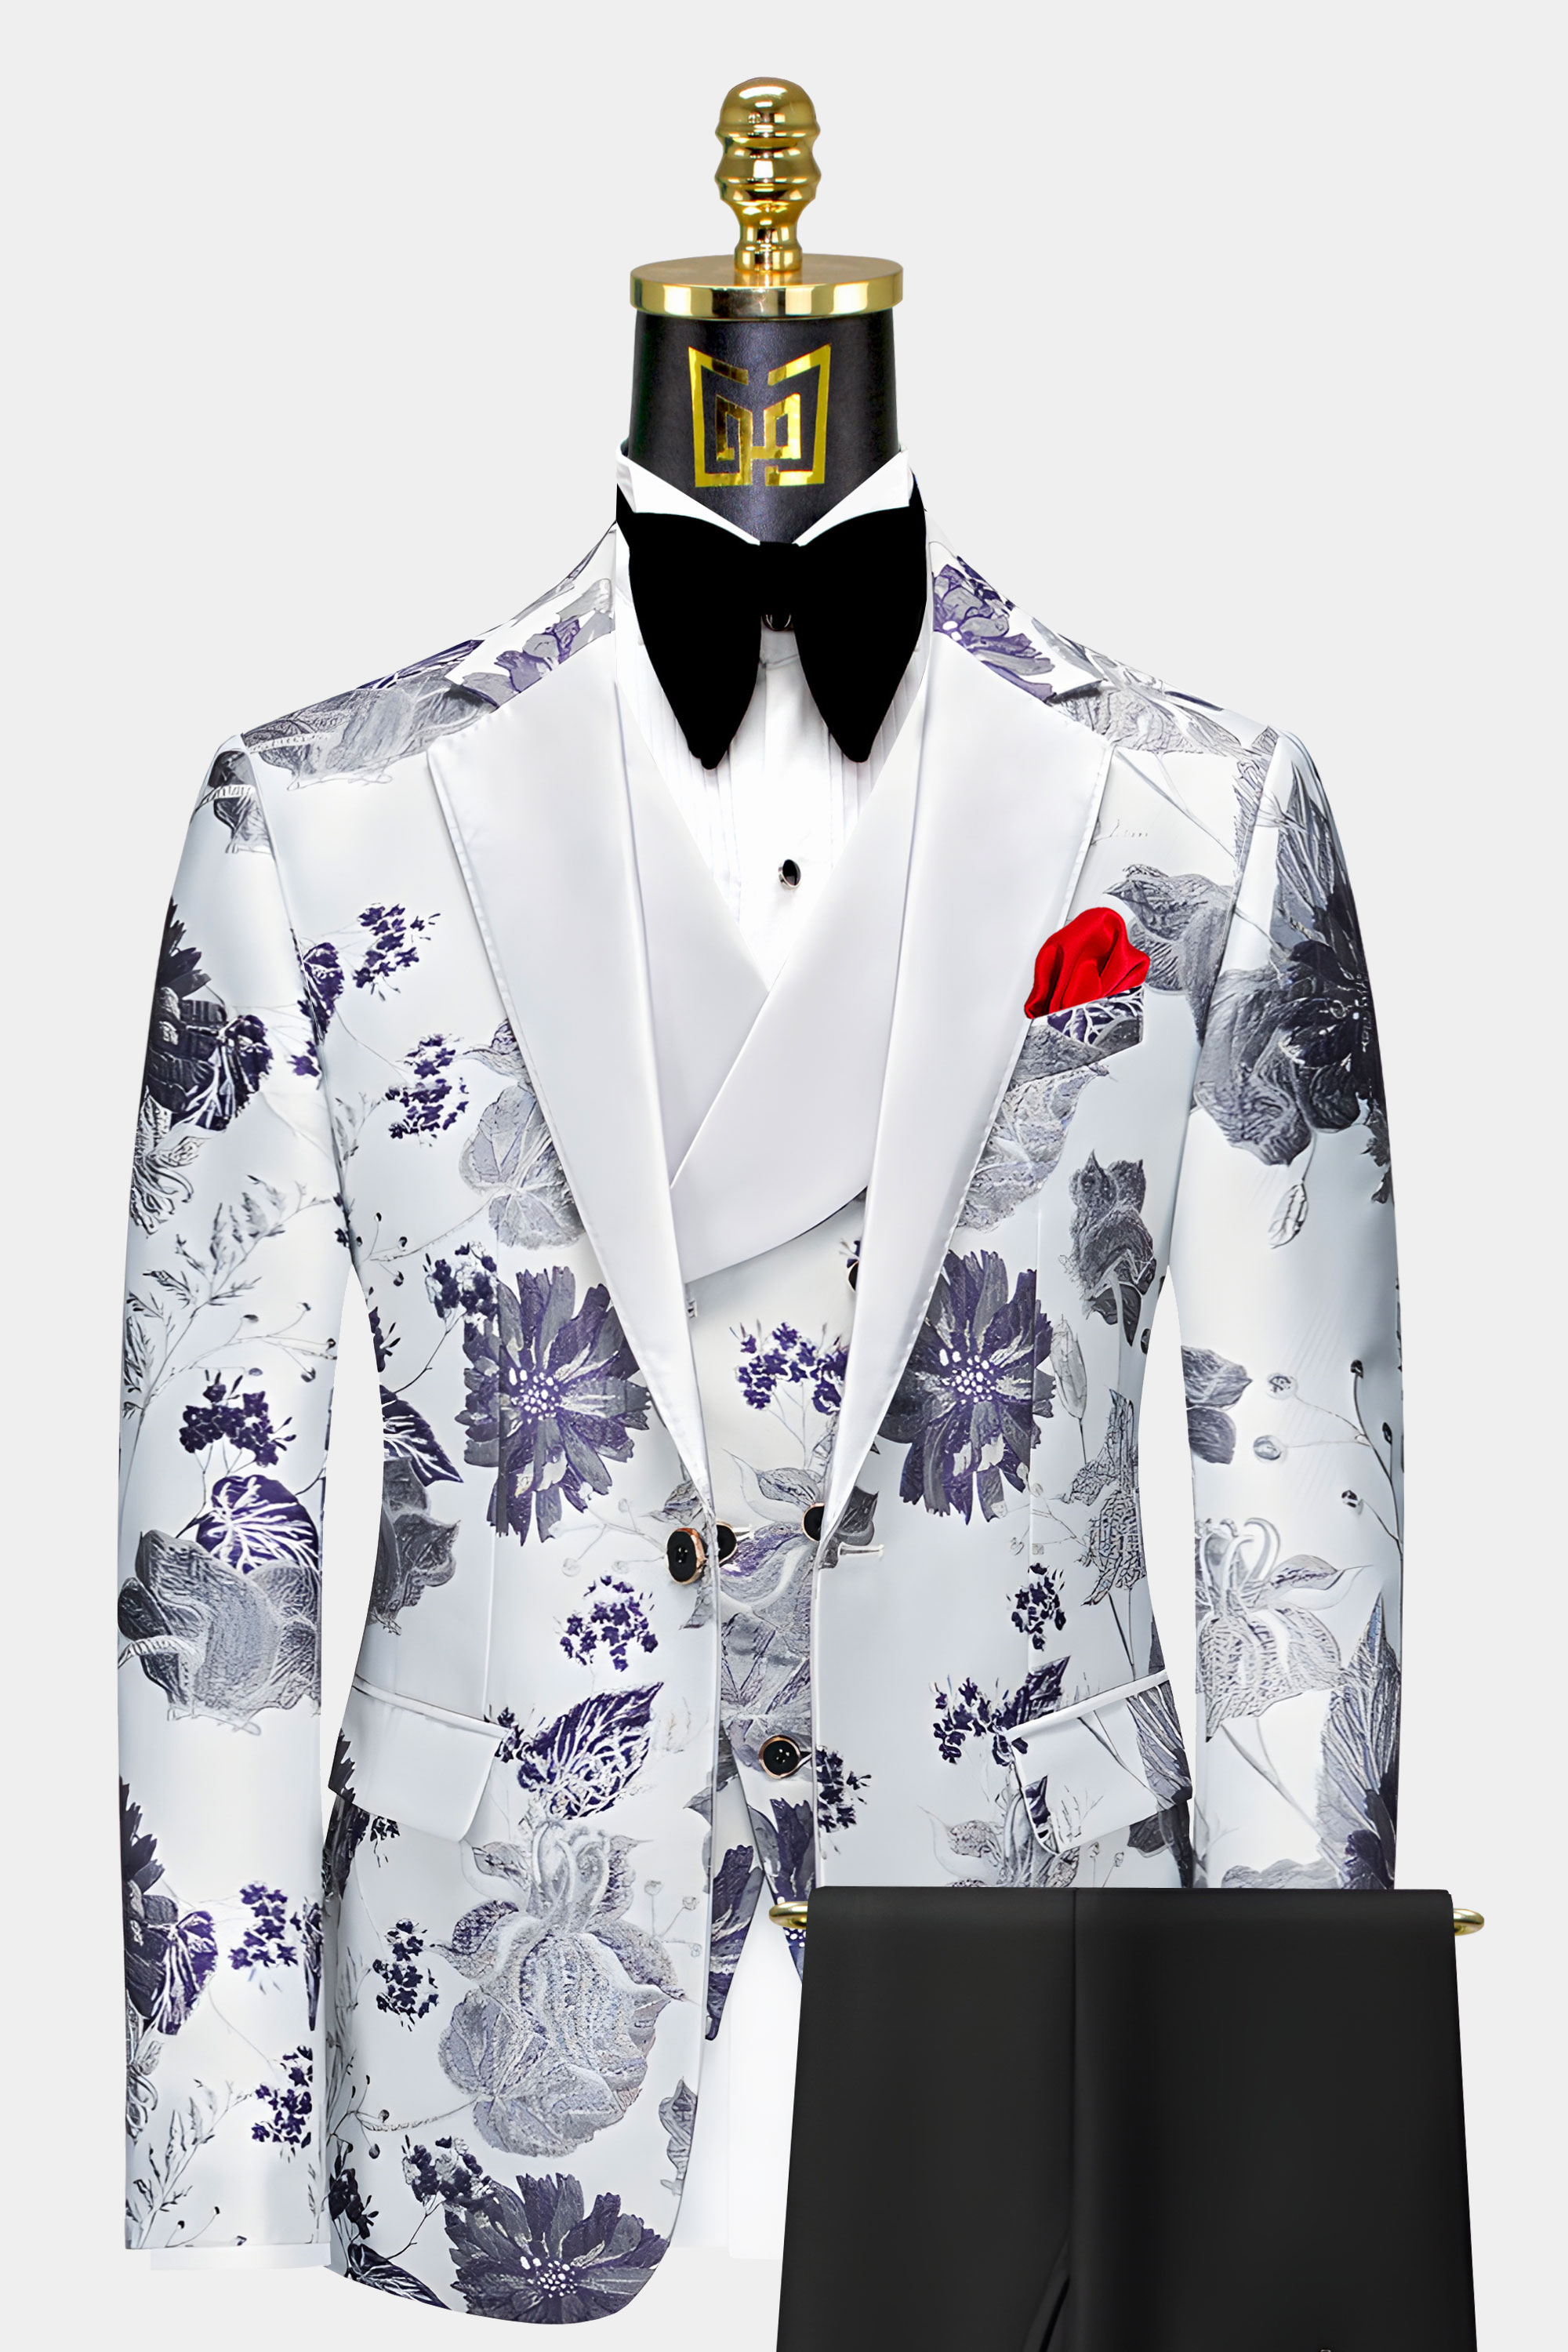 Black-Pant-White-and-Orchid-Tuxedo-Wedding-Groomsmen-Suit-from-Gentlemansguru.com